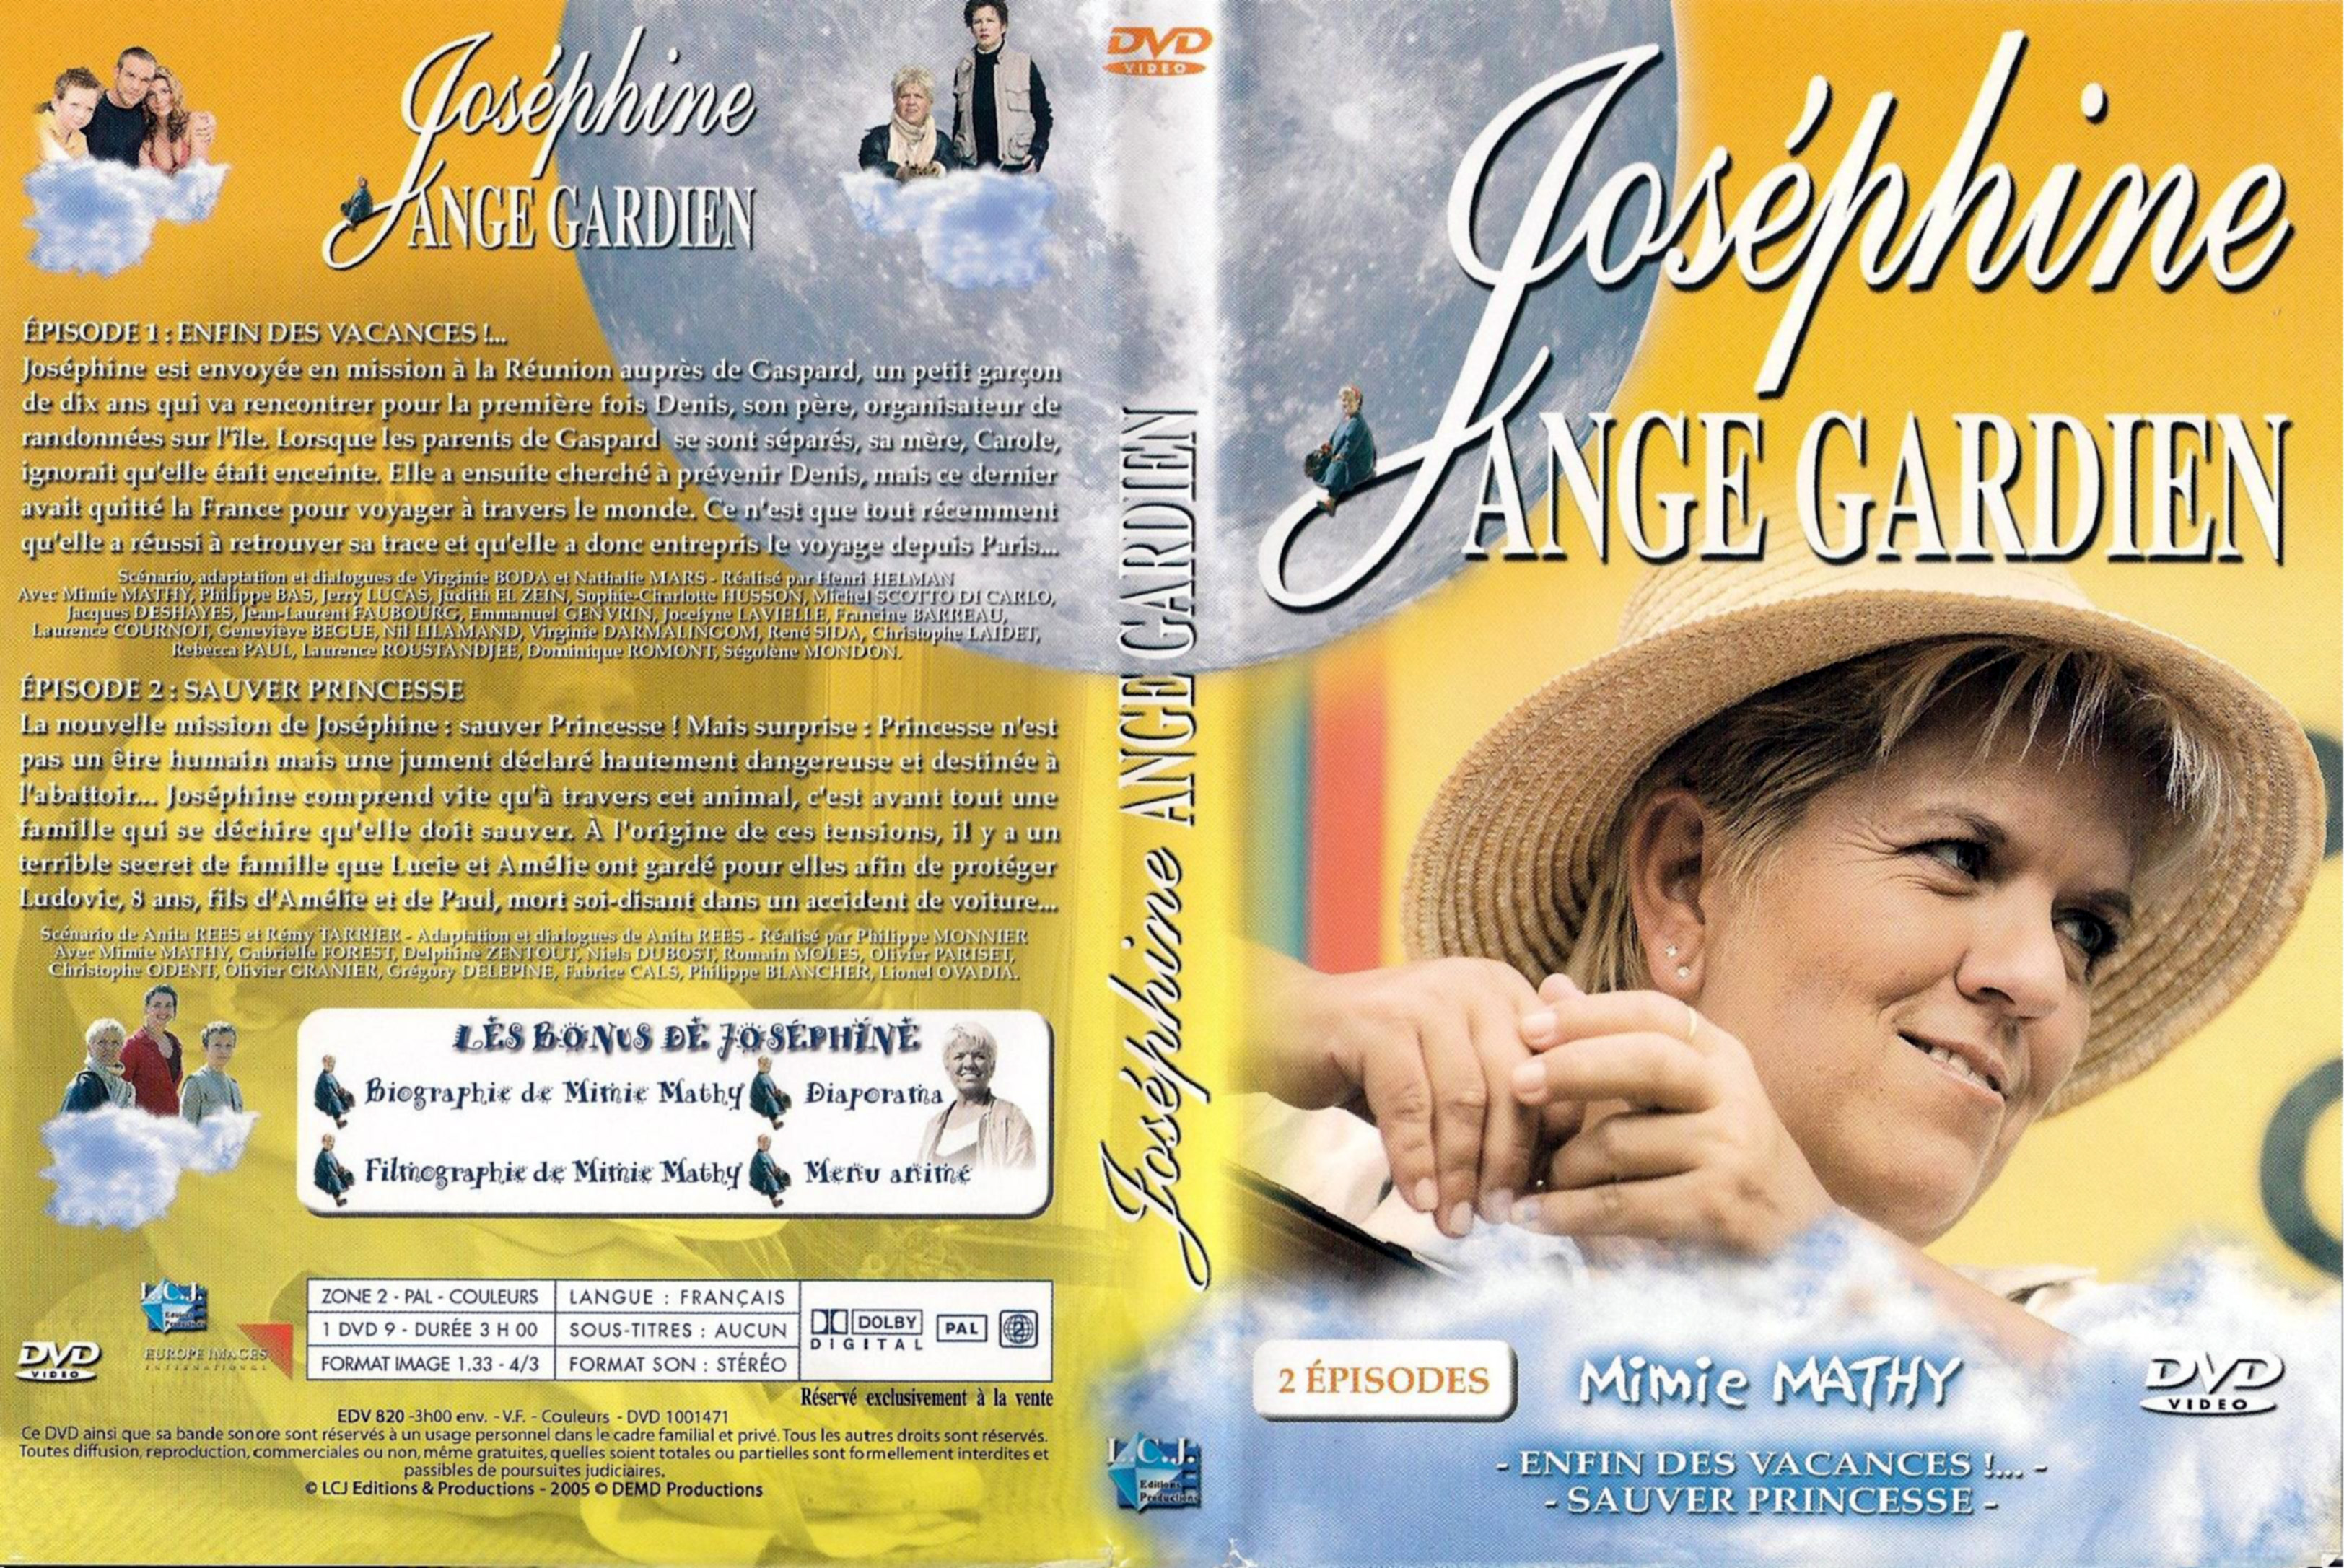 Jaquette DVD Josephine ange gardien vol 11 v2